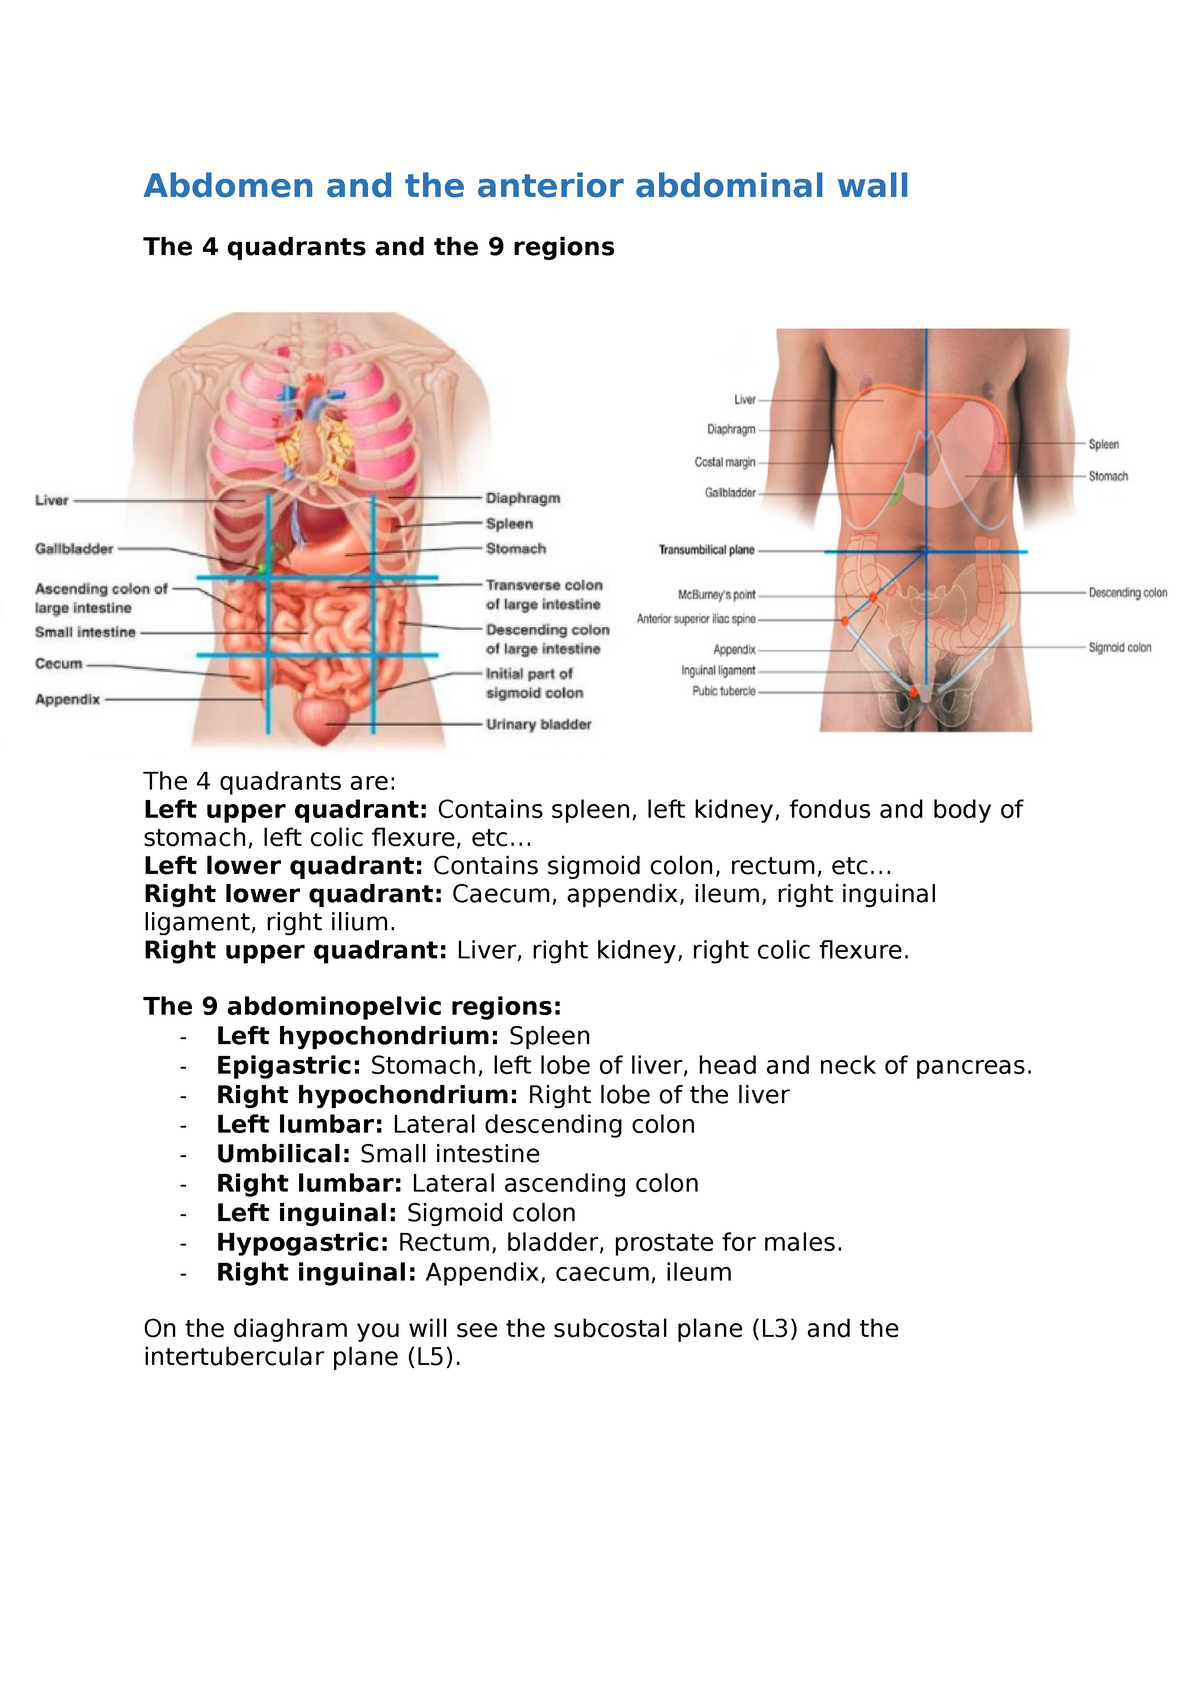 Abdomen and the anterior abdominal wall - .. Left lower quadrant ...